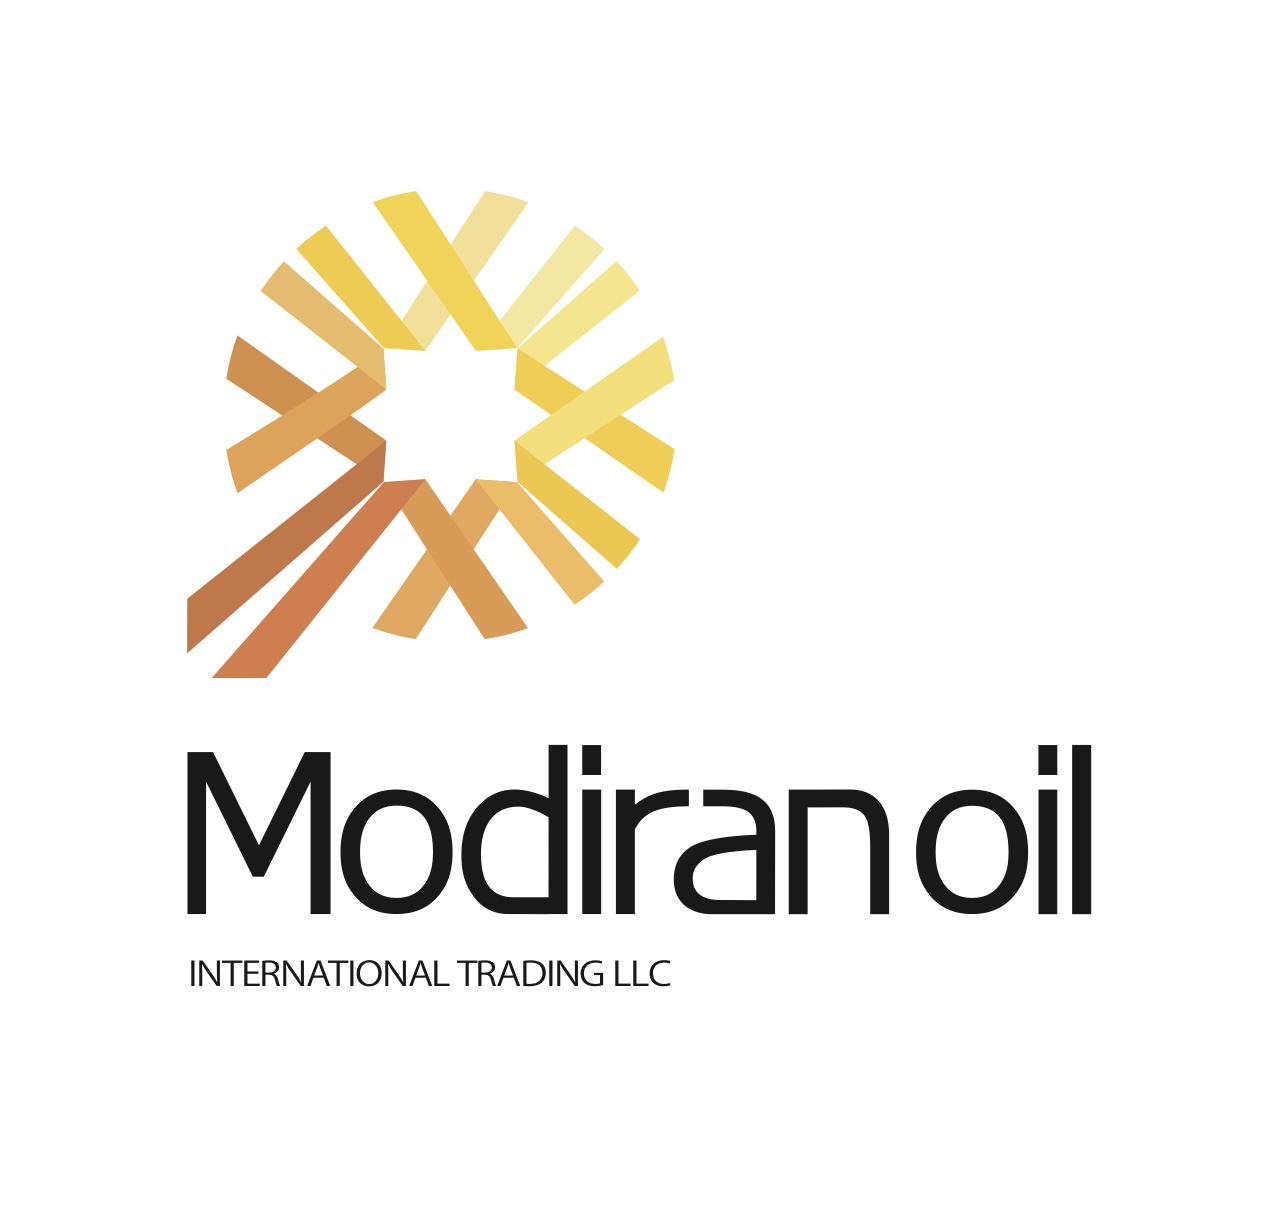 MODIRANOIL INTERNATIONAL TRADING LLC